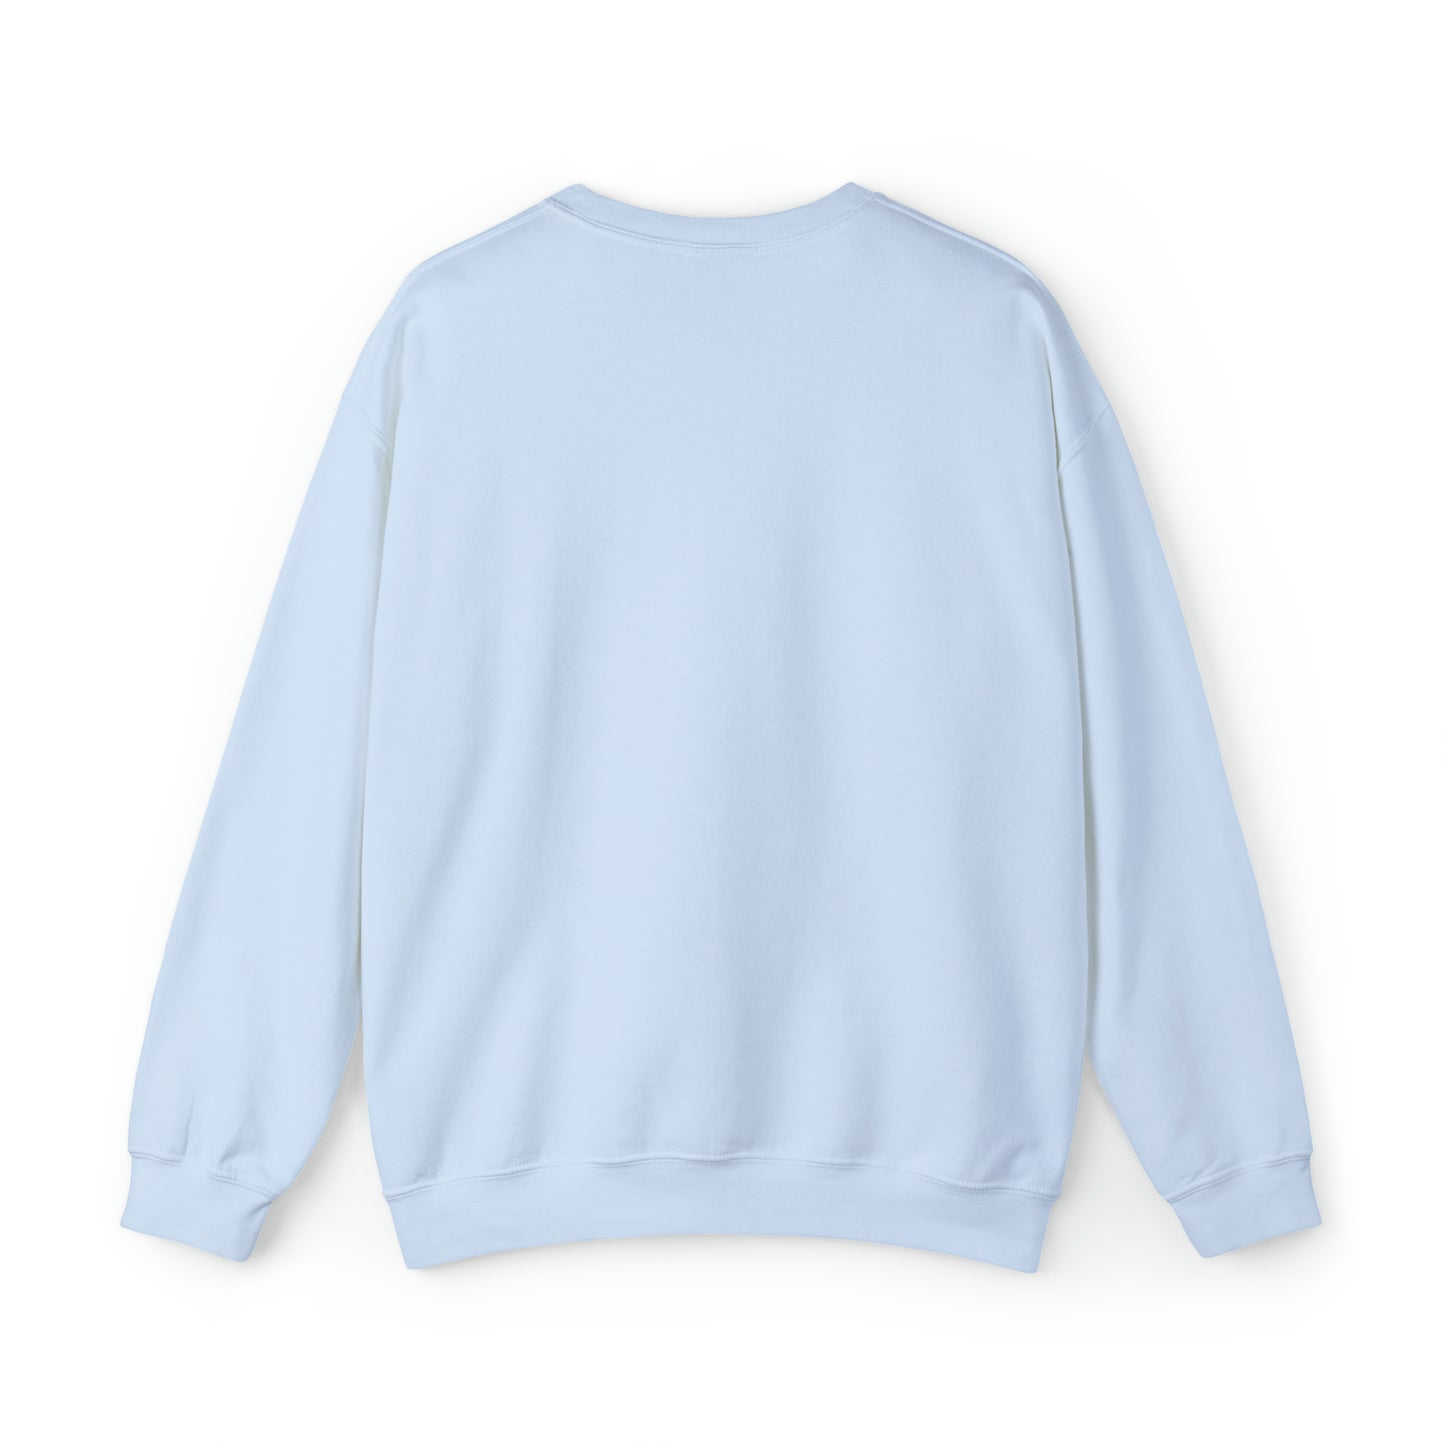 Inspire Wear white logo Unisex Heavy Blend™ Crewneck Sweatshirt